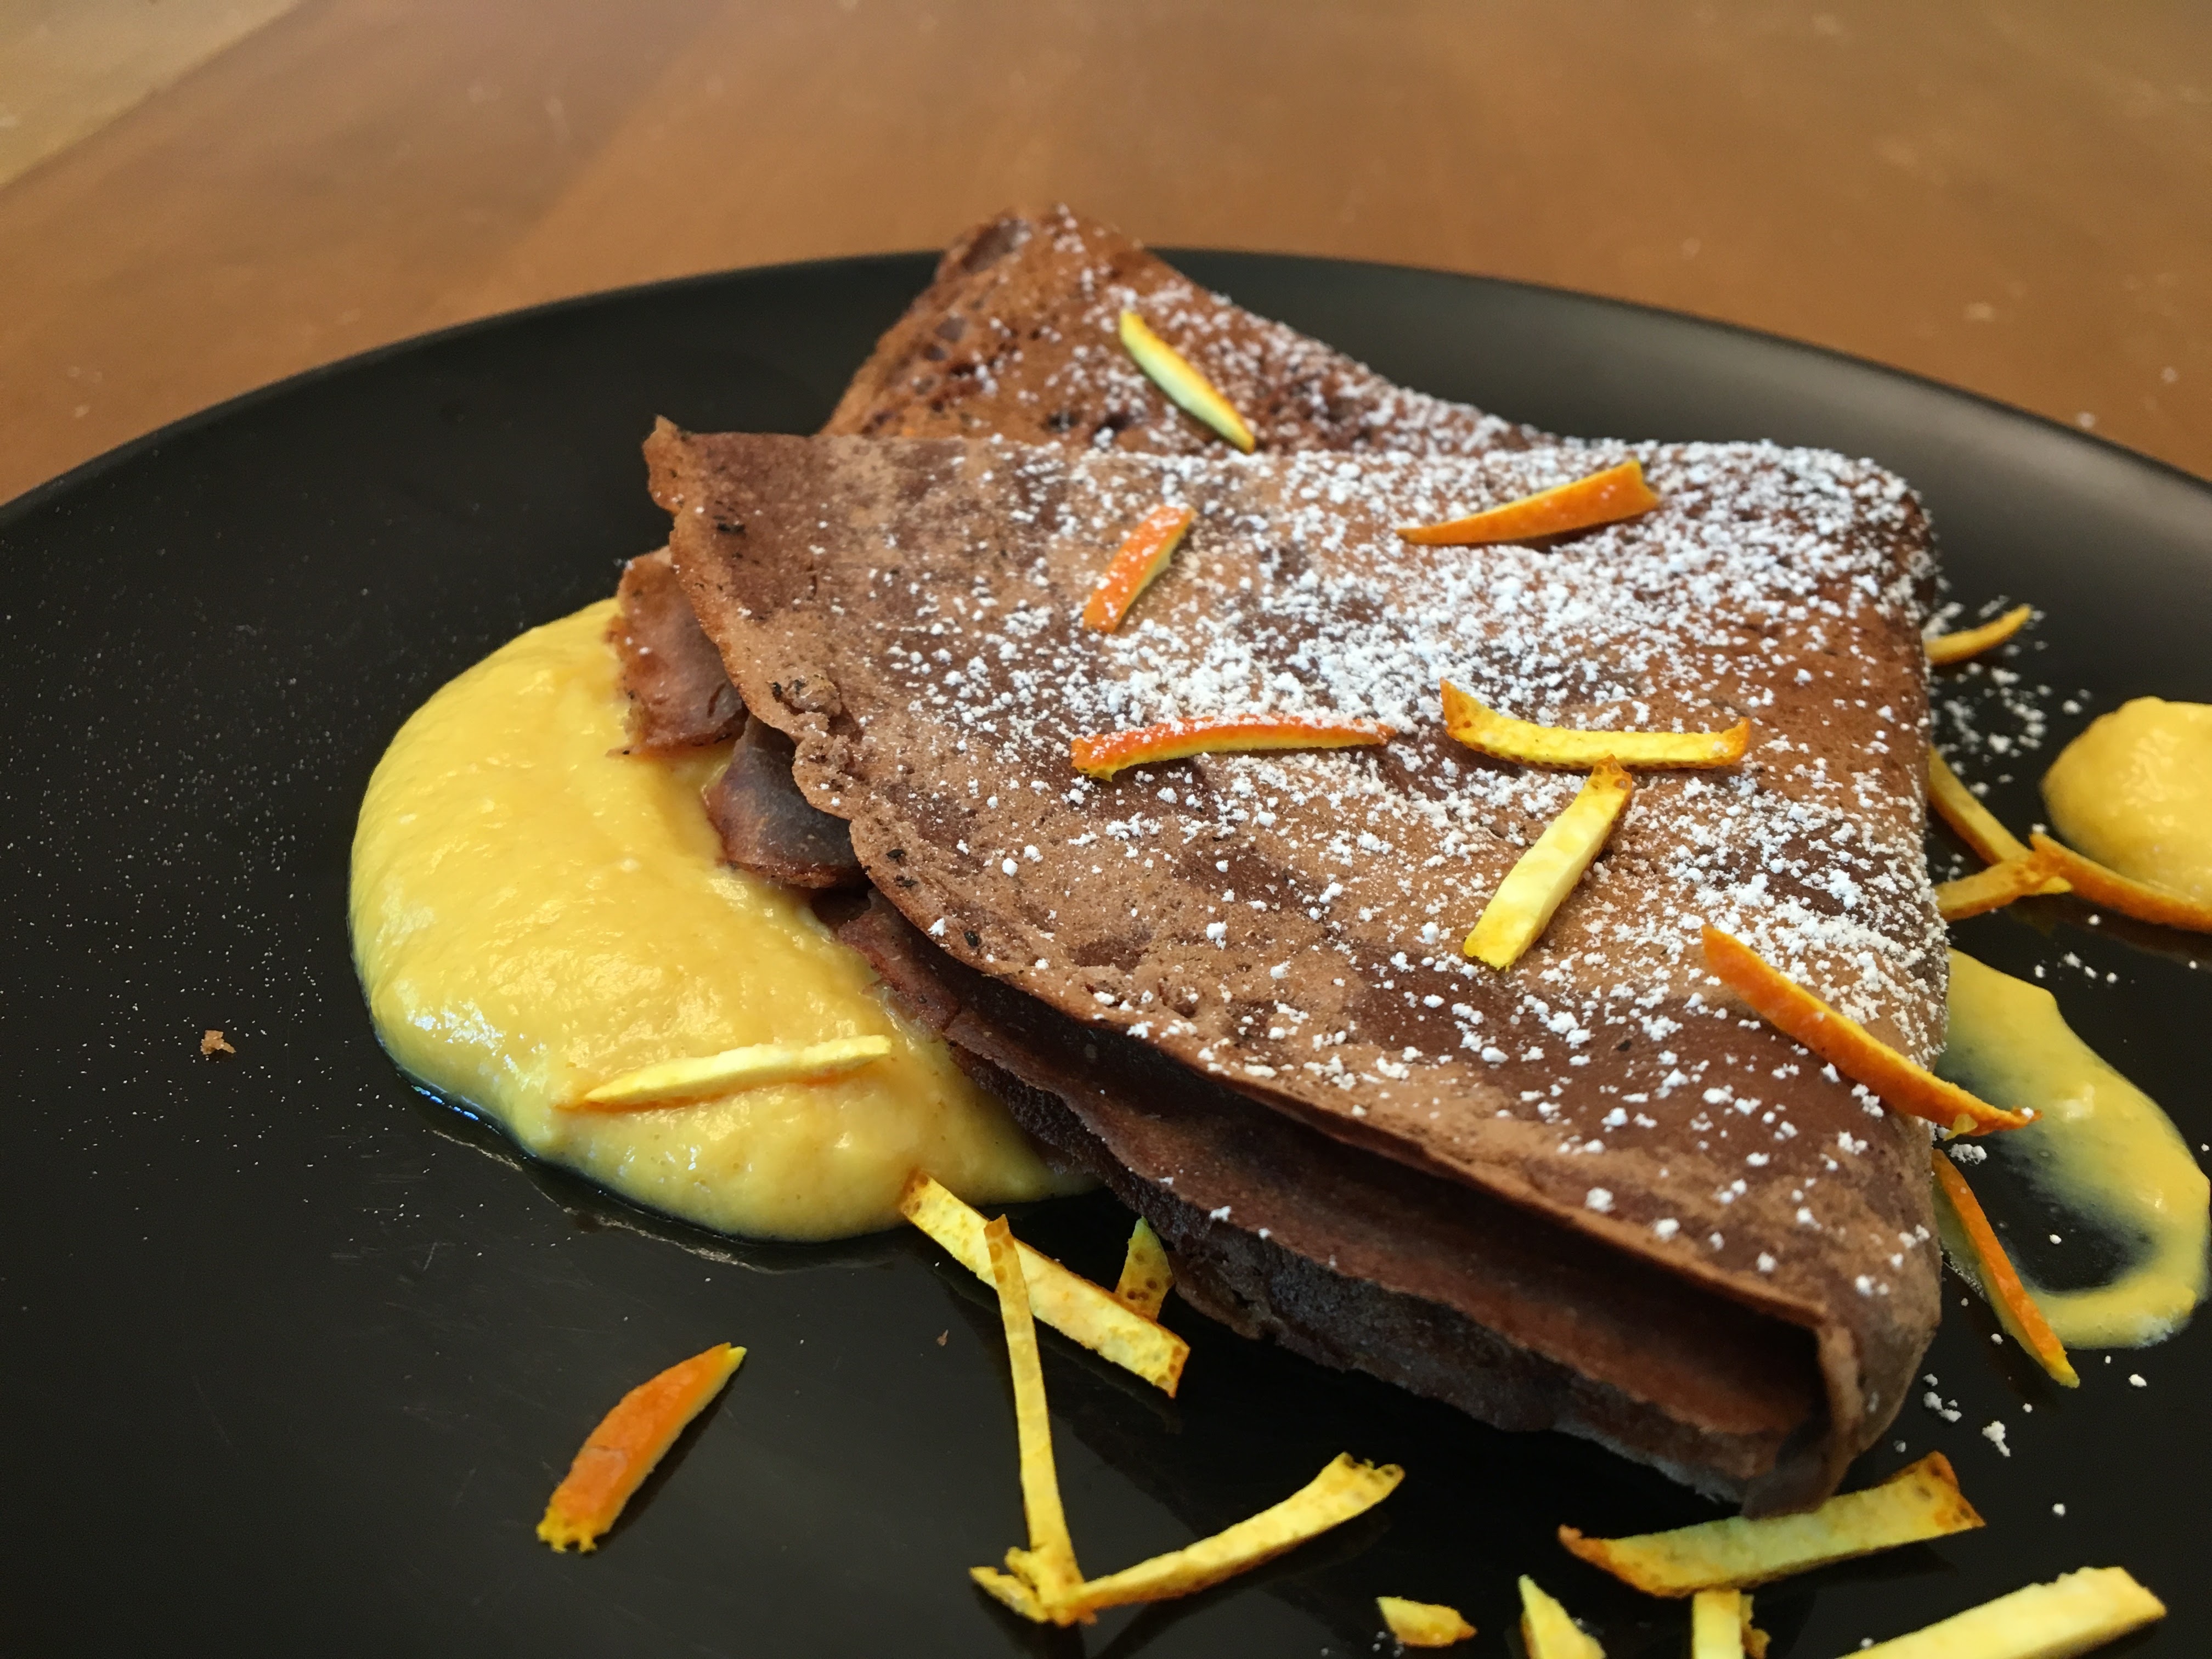 Folded chocolate crêpe on dollops of custard garnished with orange peel and powered sugar.